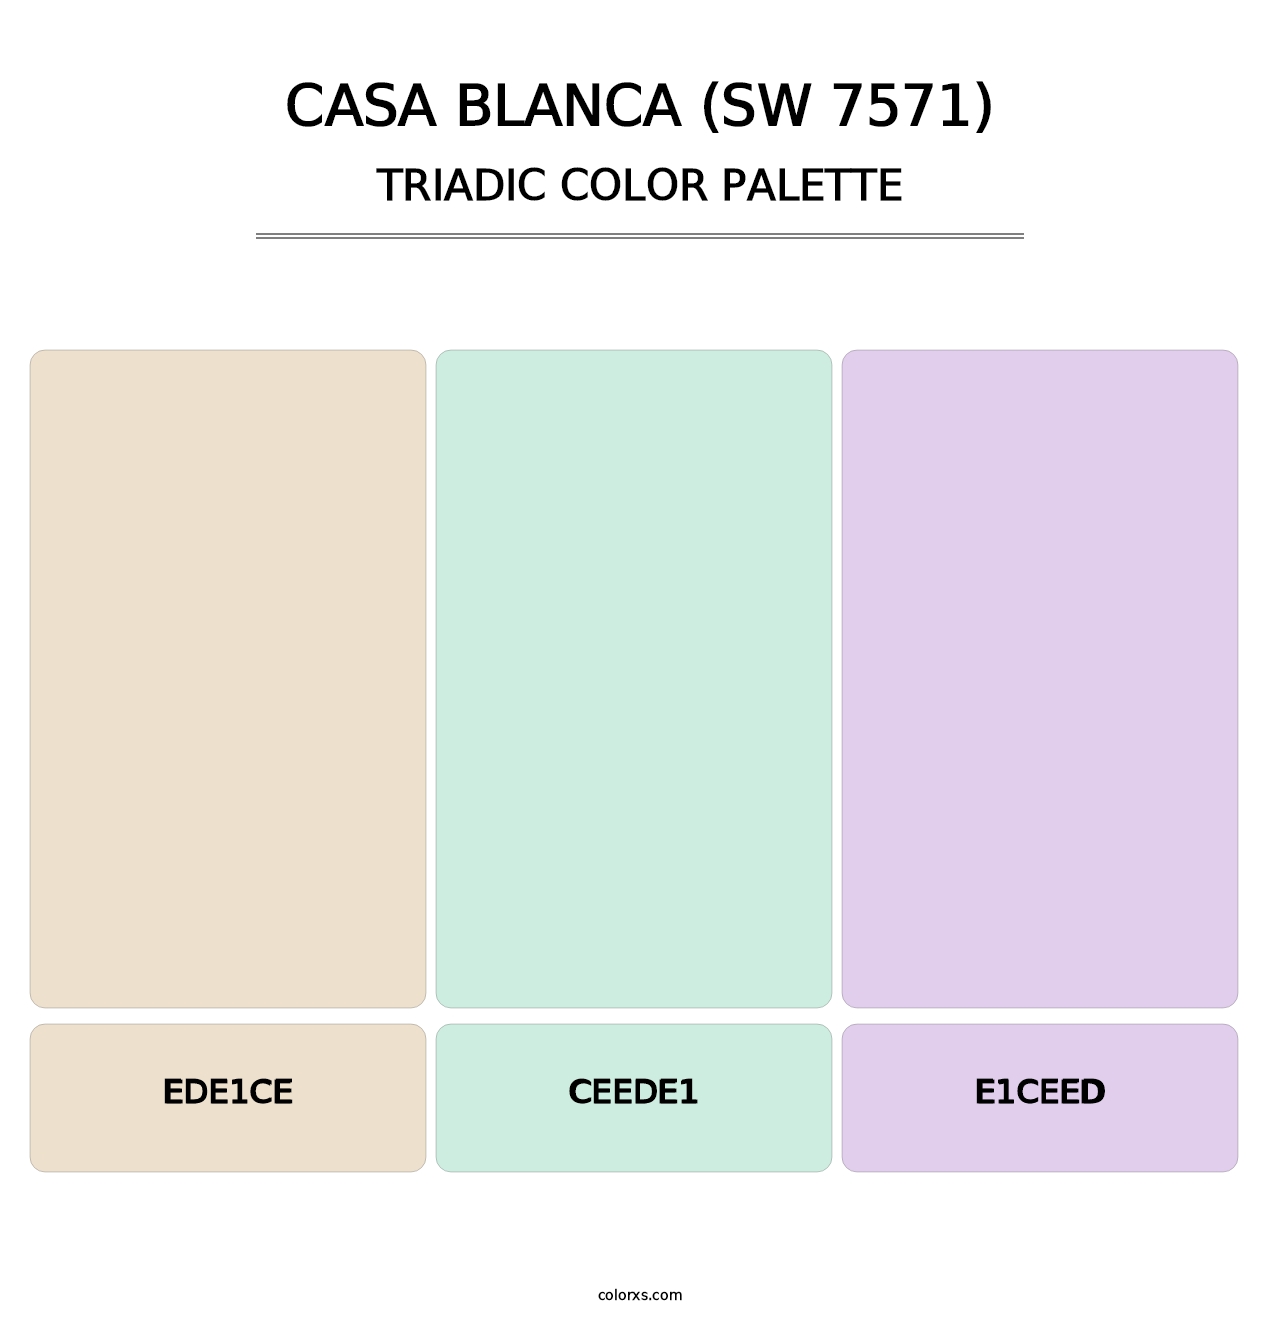 Casa Blanca (SW 7571) - Triadic Color Palette